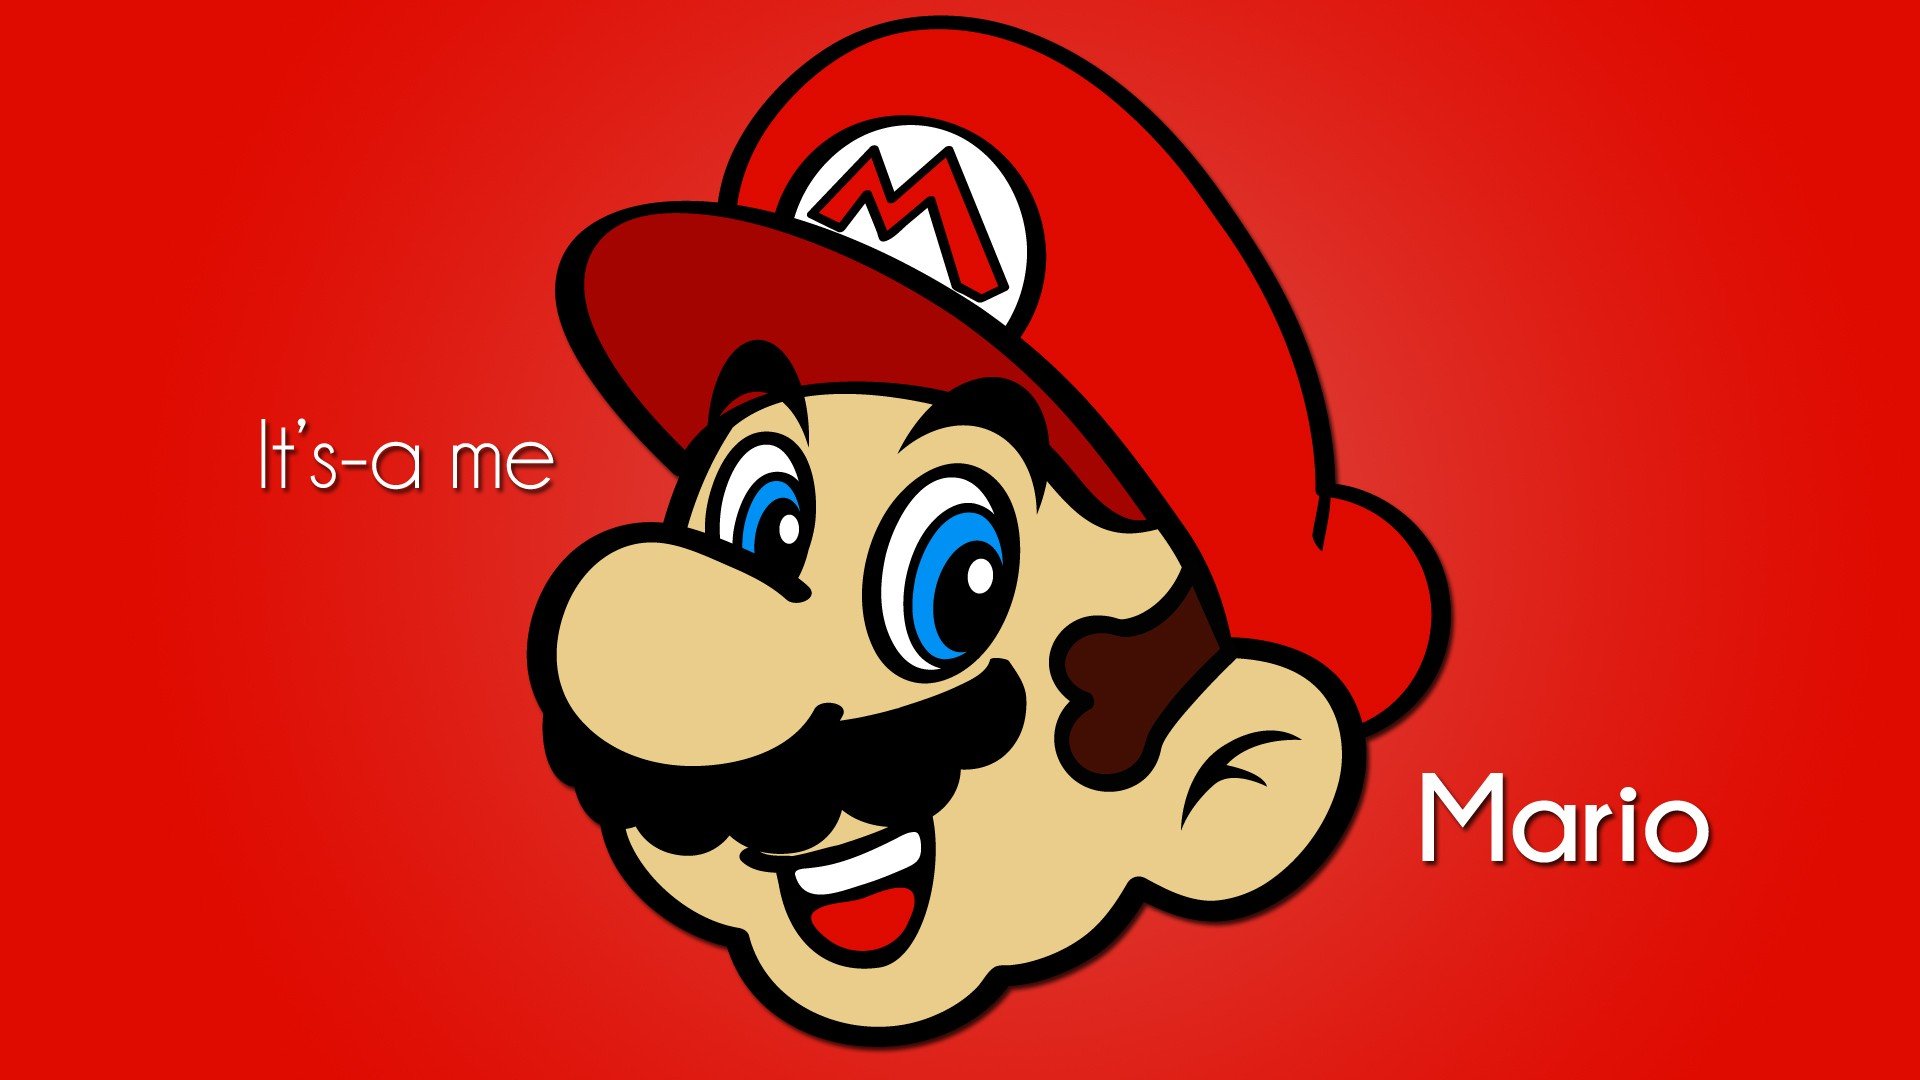 Nintendo video games minimalistic Mario Super Mario digital art ...